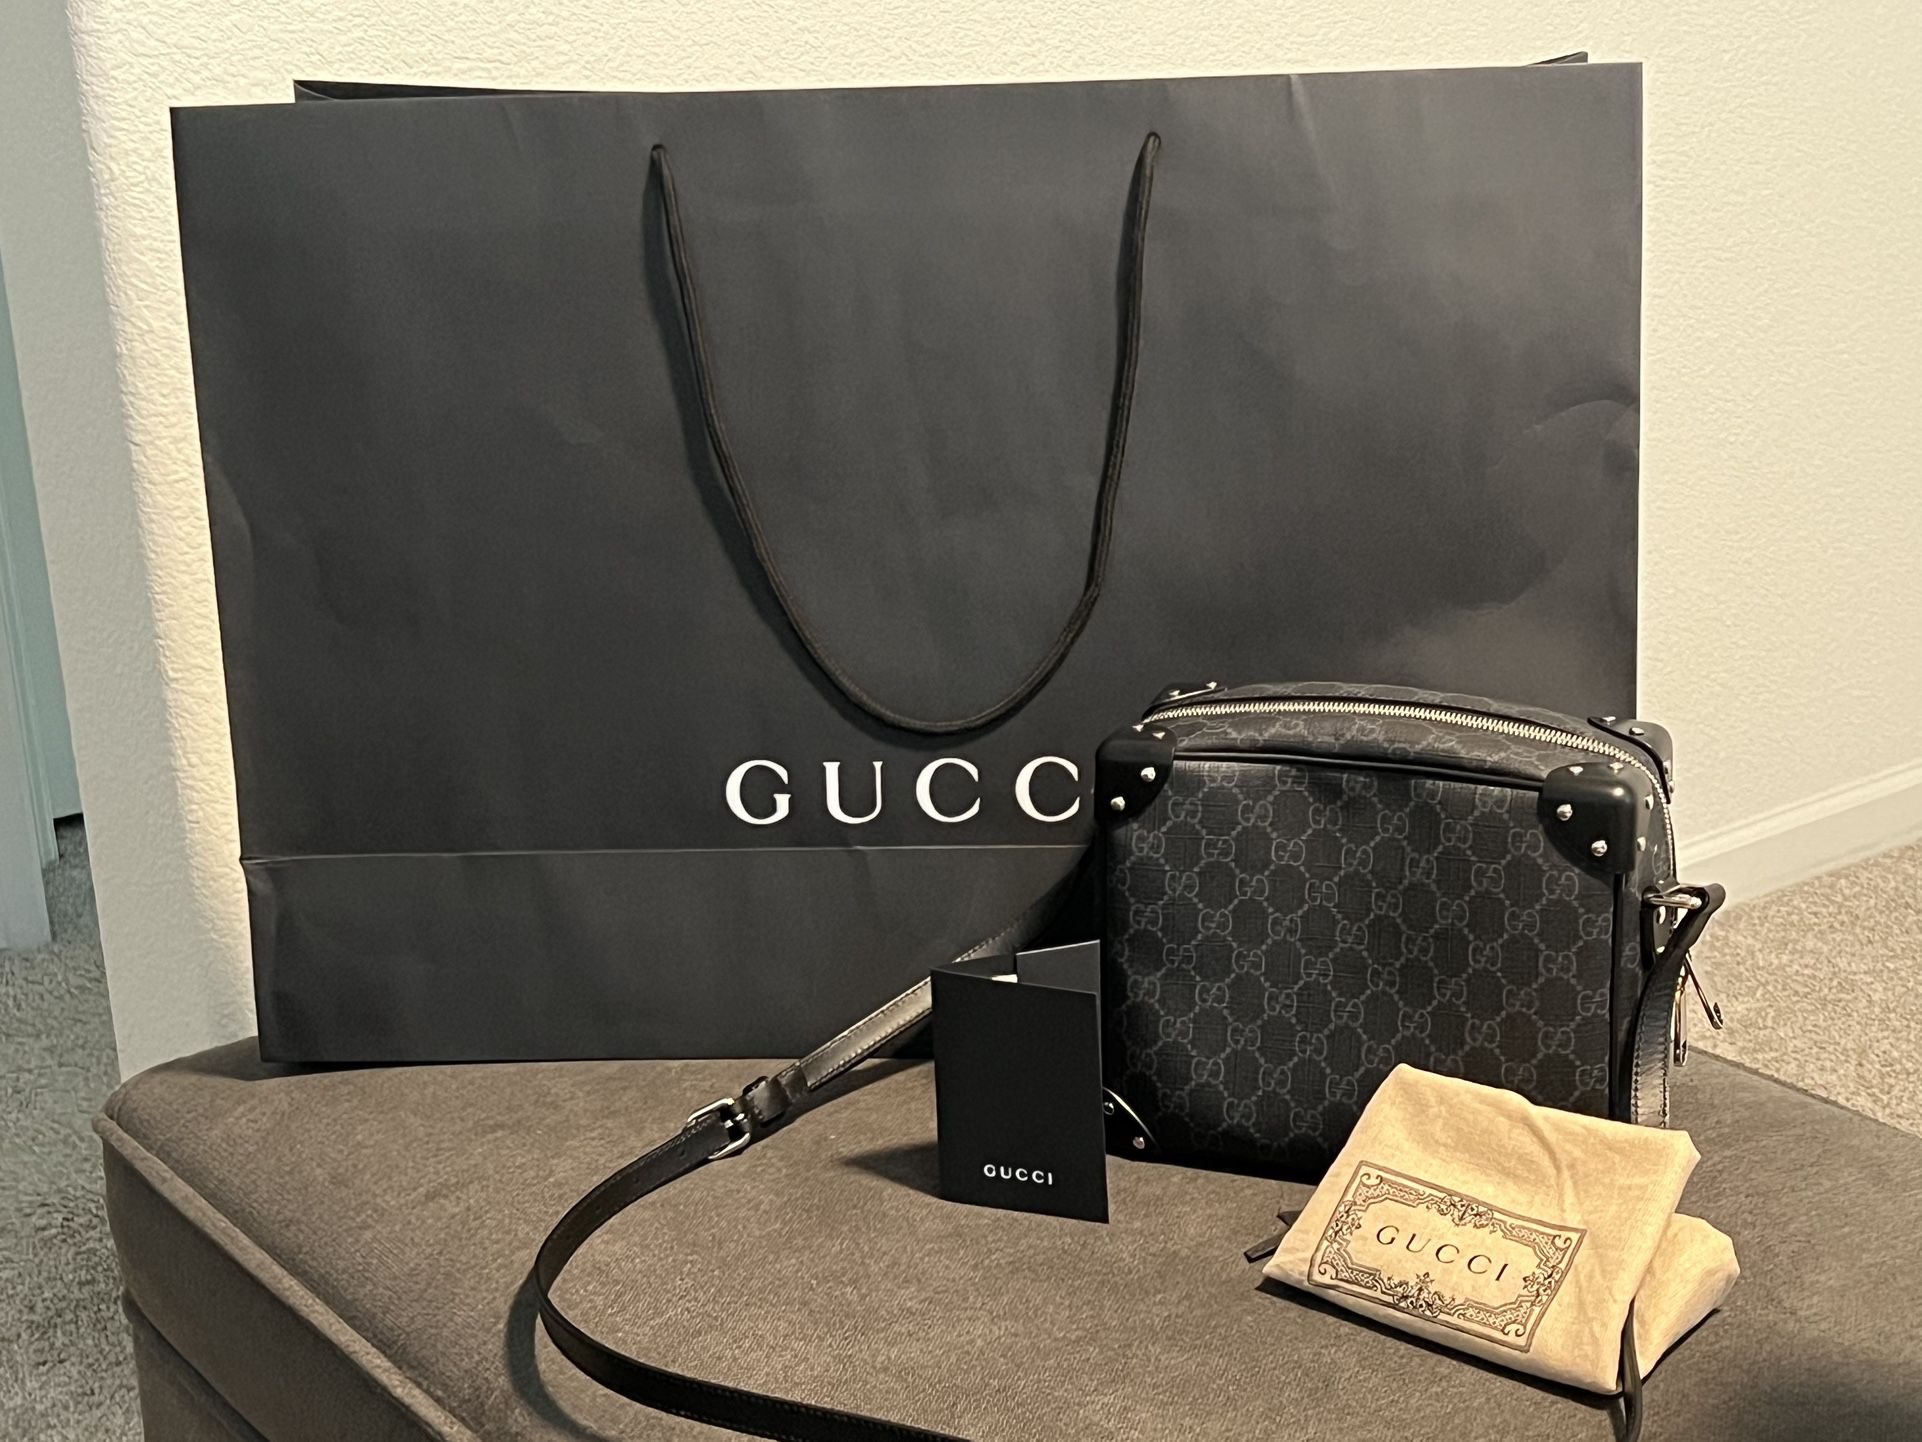 Gucci Luggage Bag